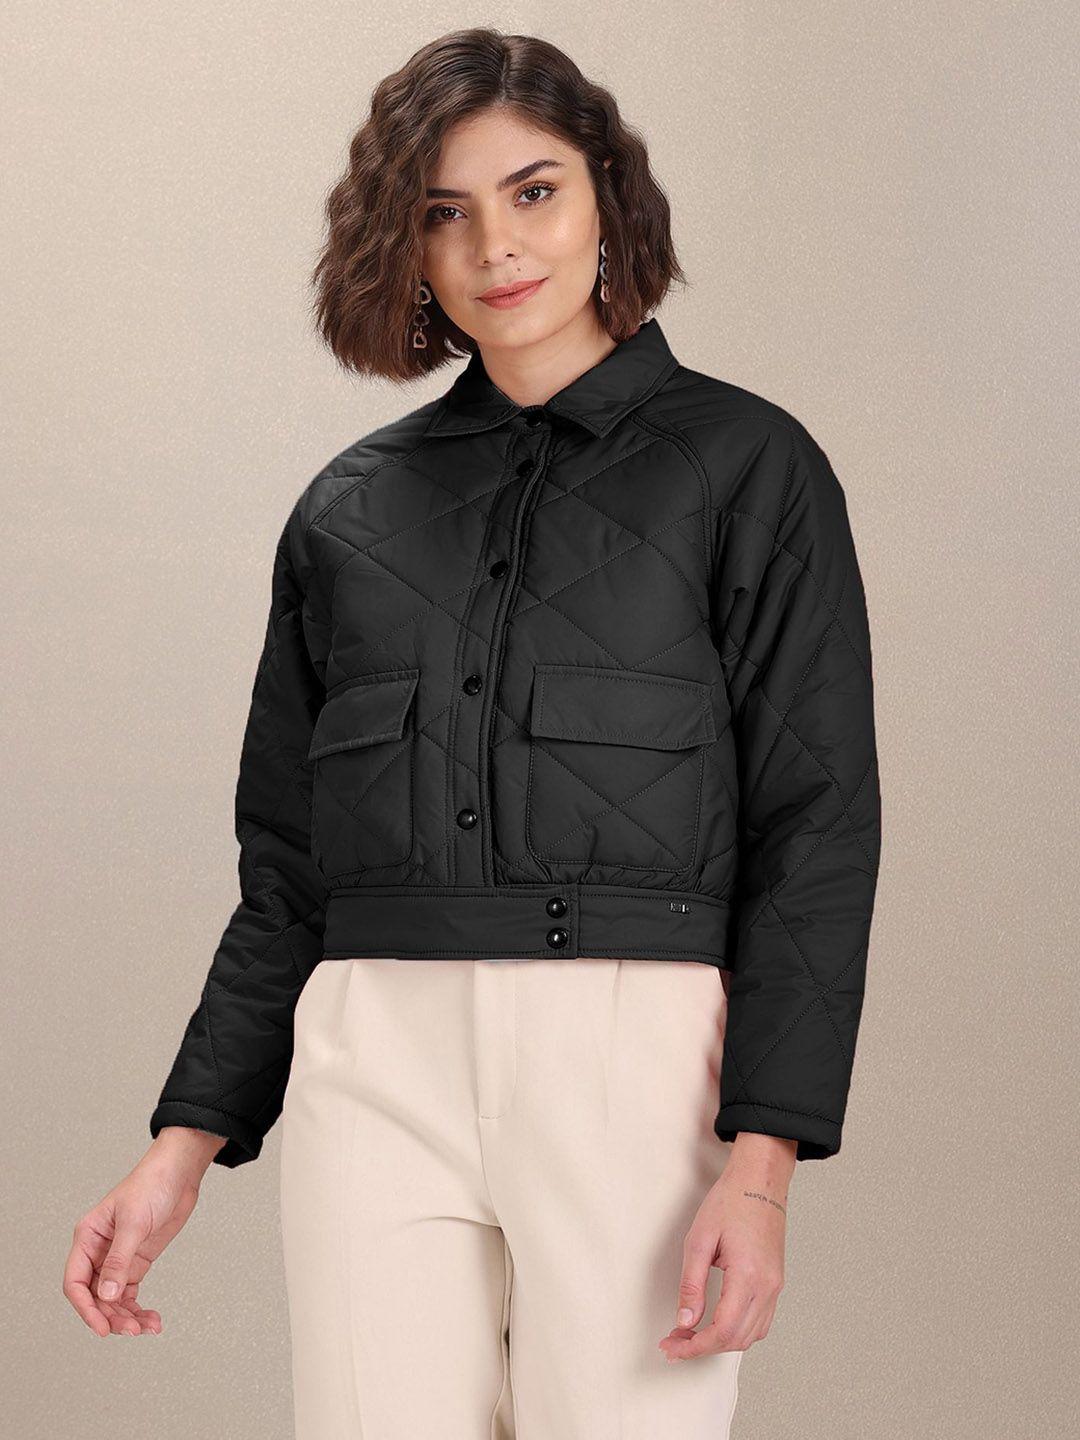 u.s. polo assn. women black tailored jacket